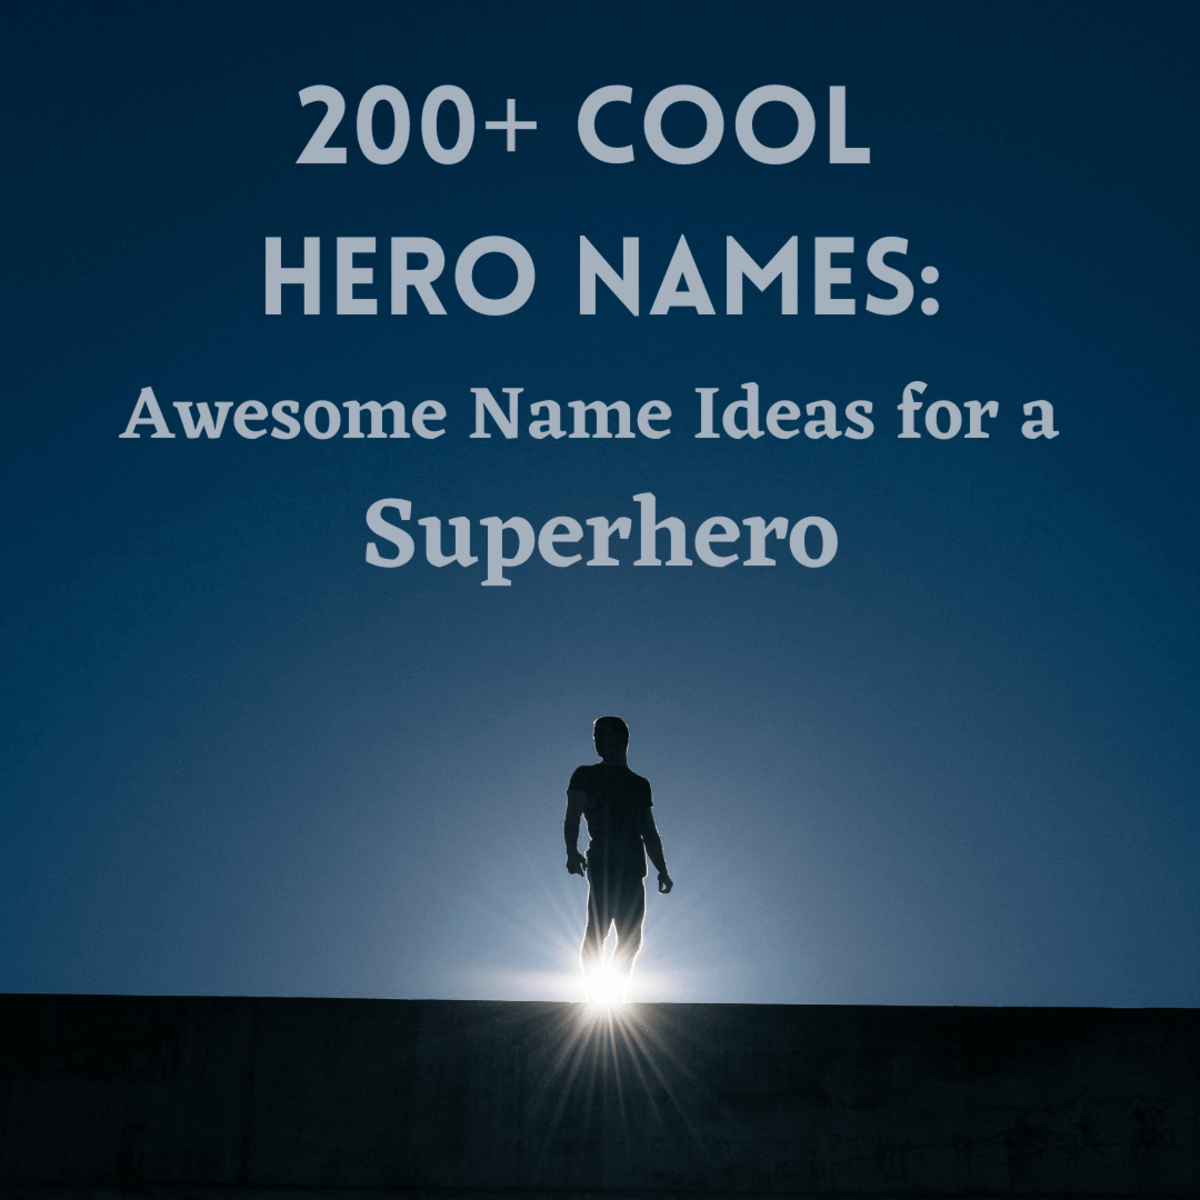 Superheroes need a name.